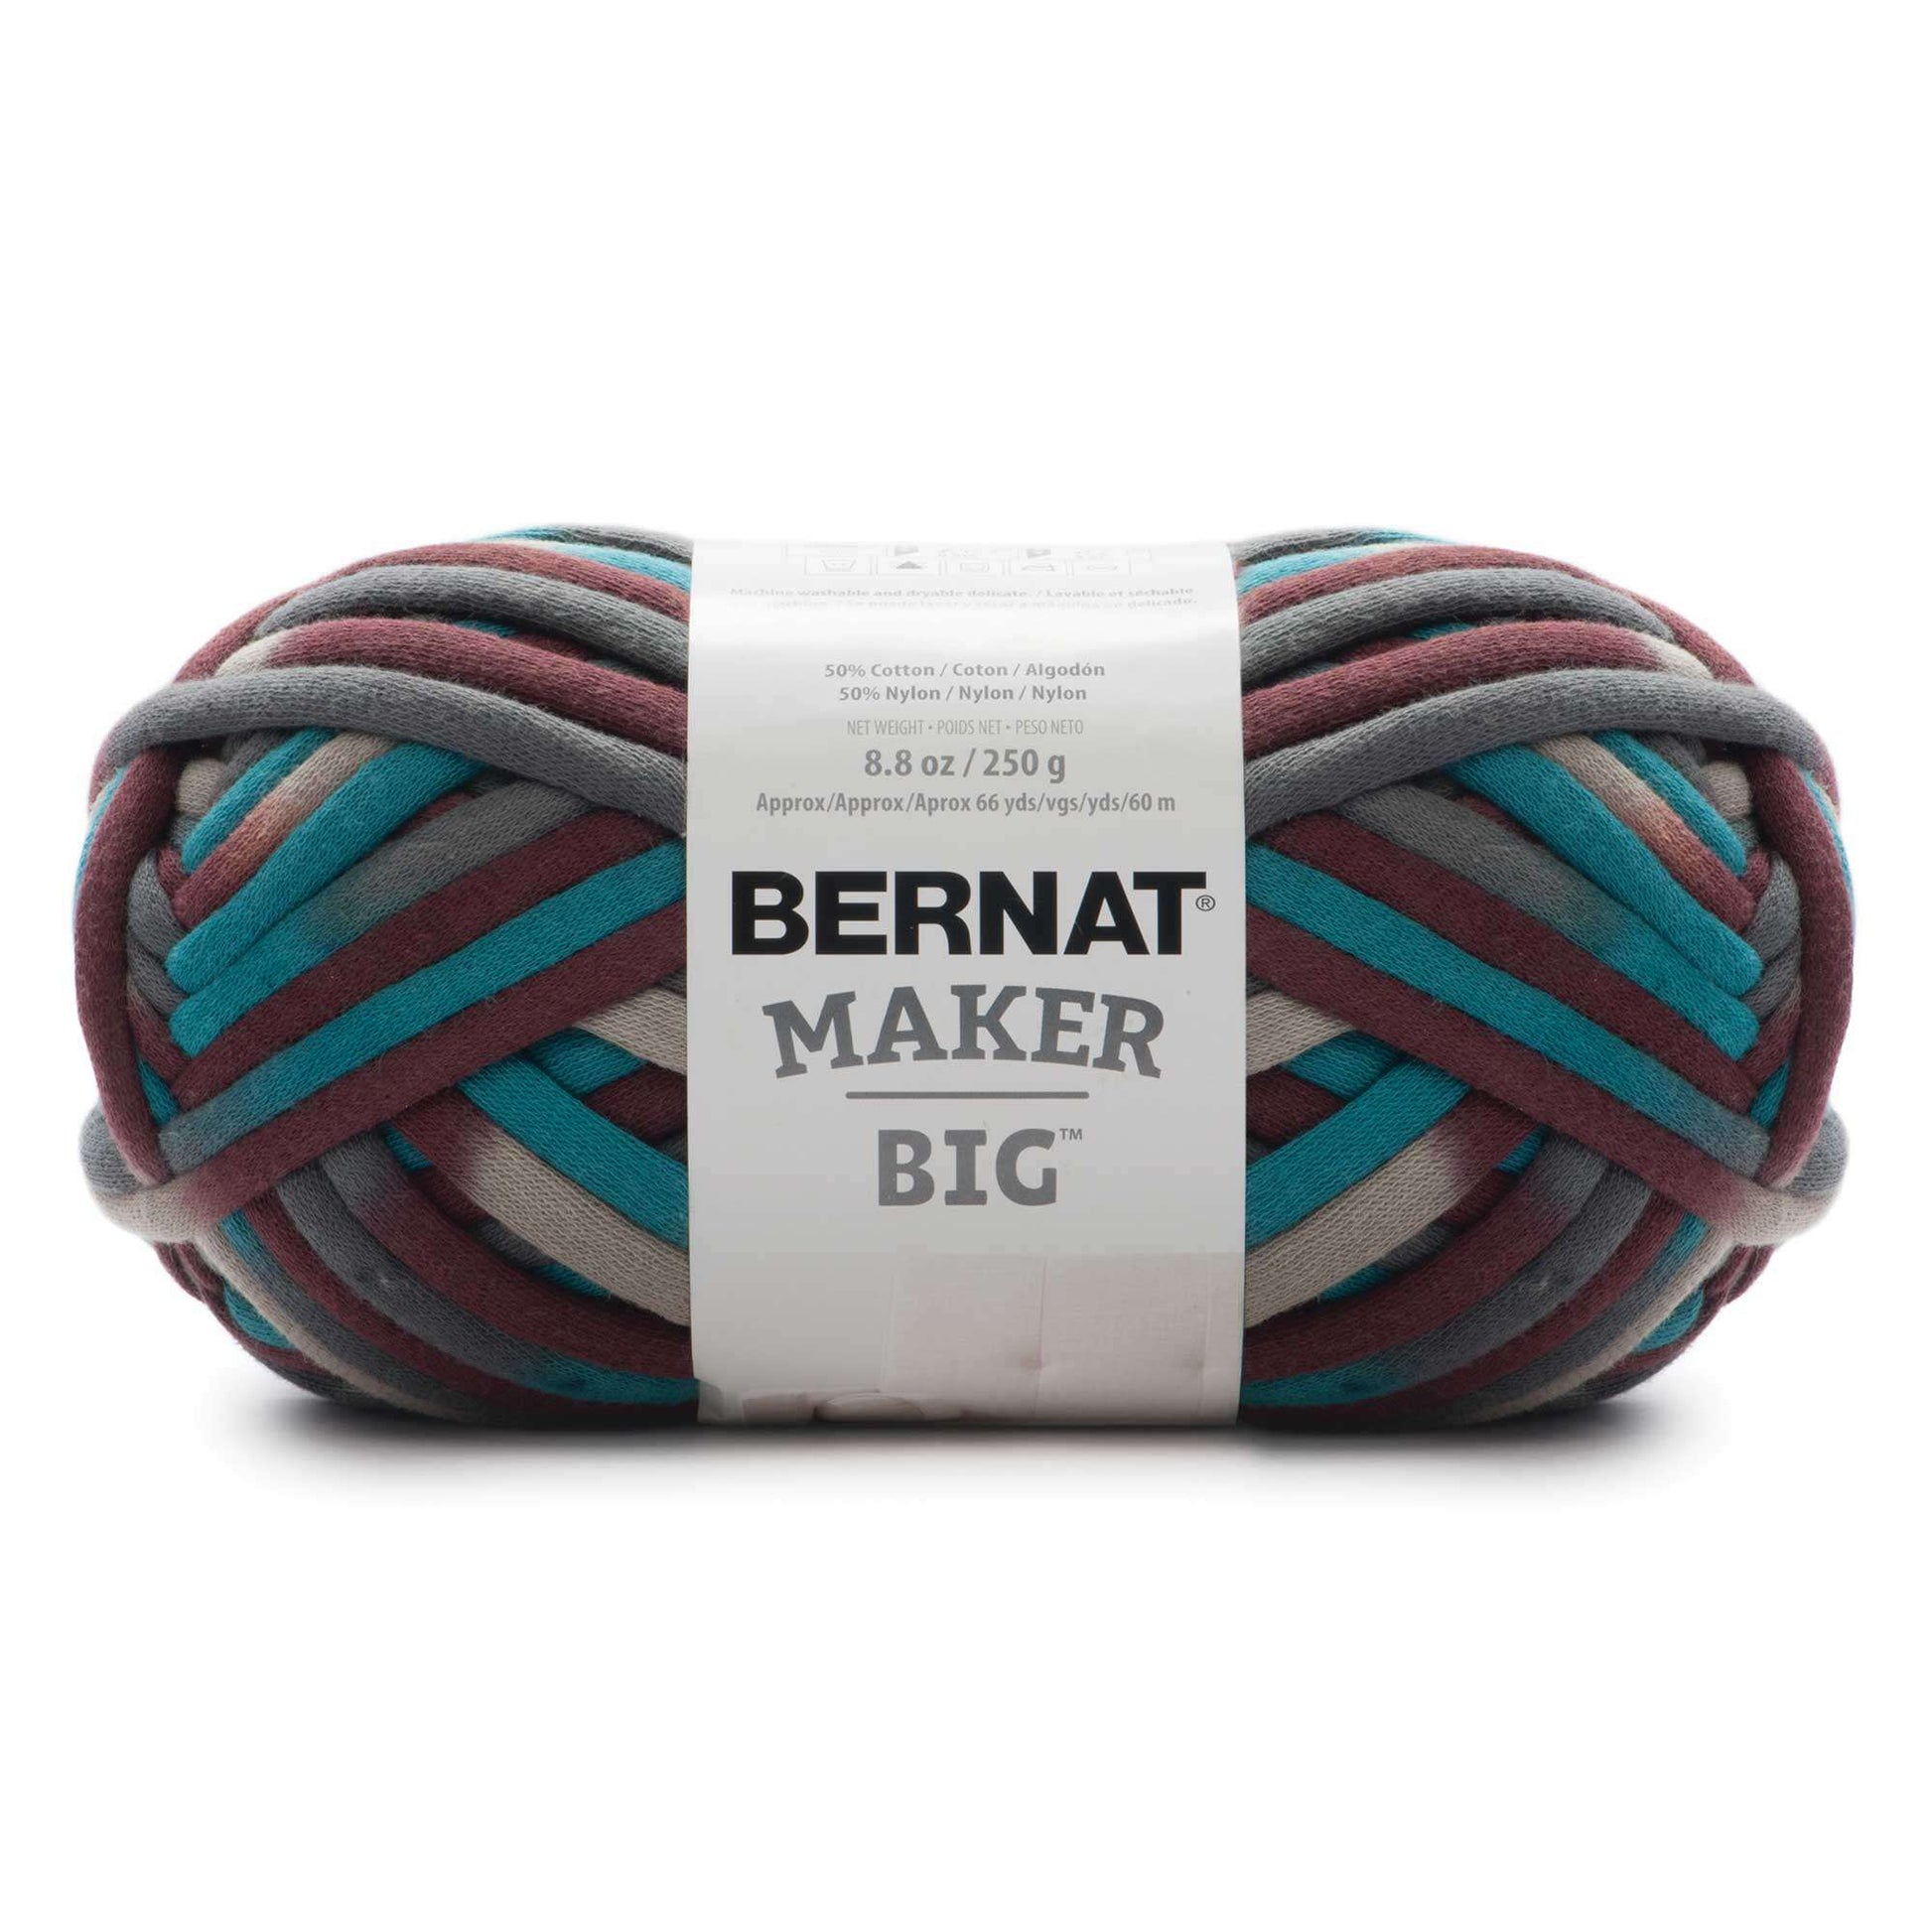 Bernat Maker Big Yarn - Discontinued